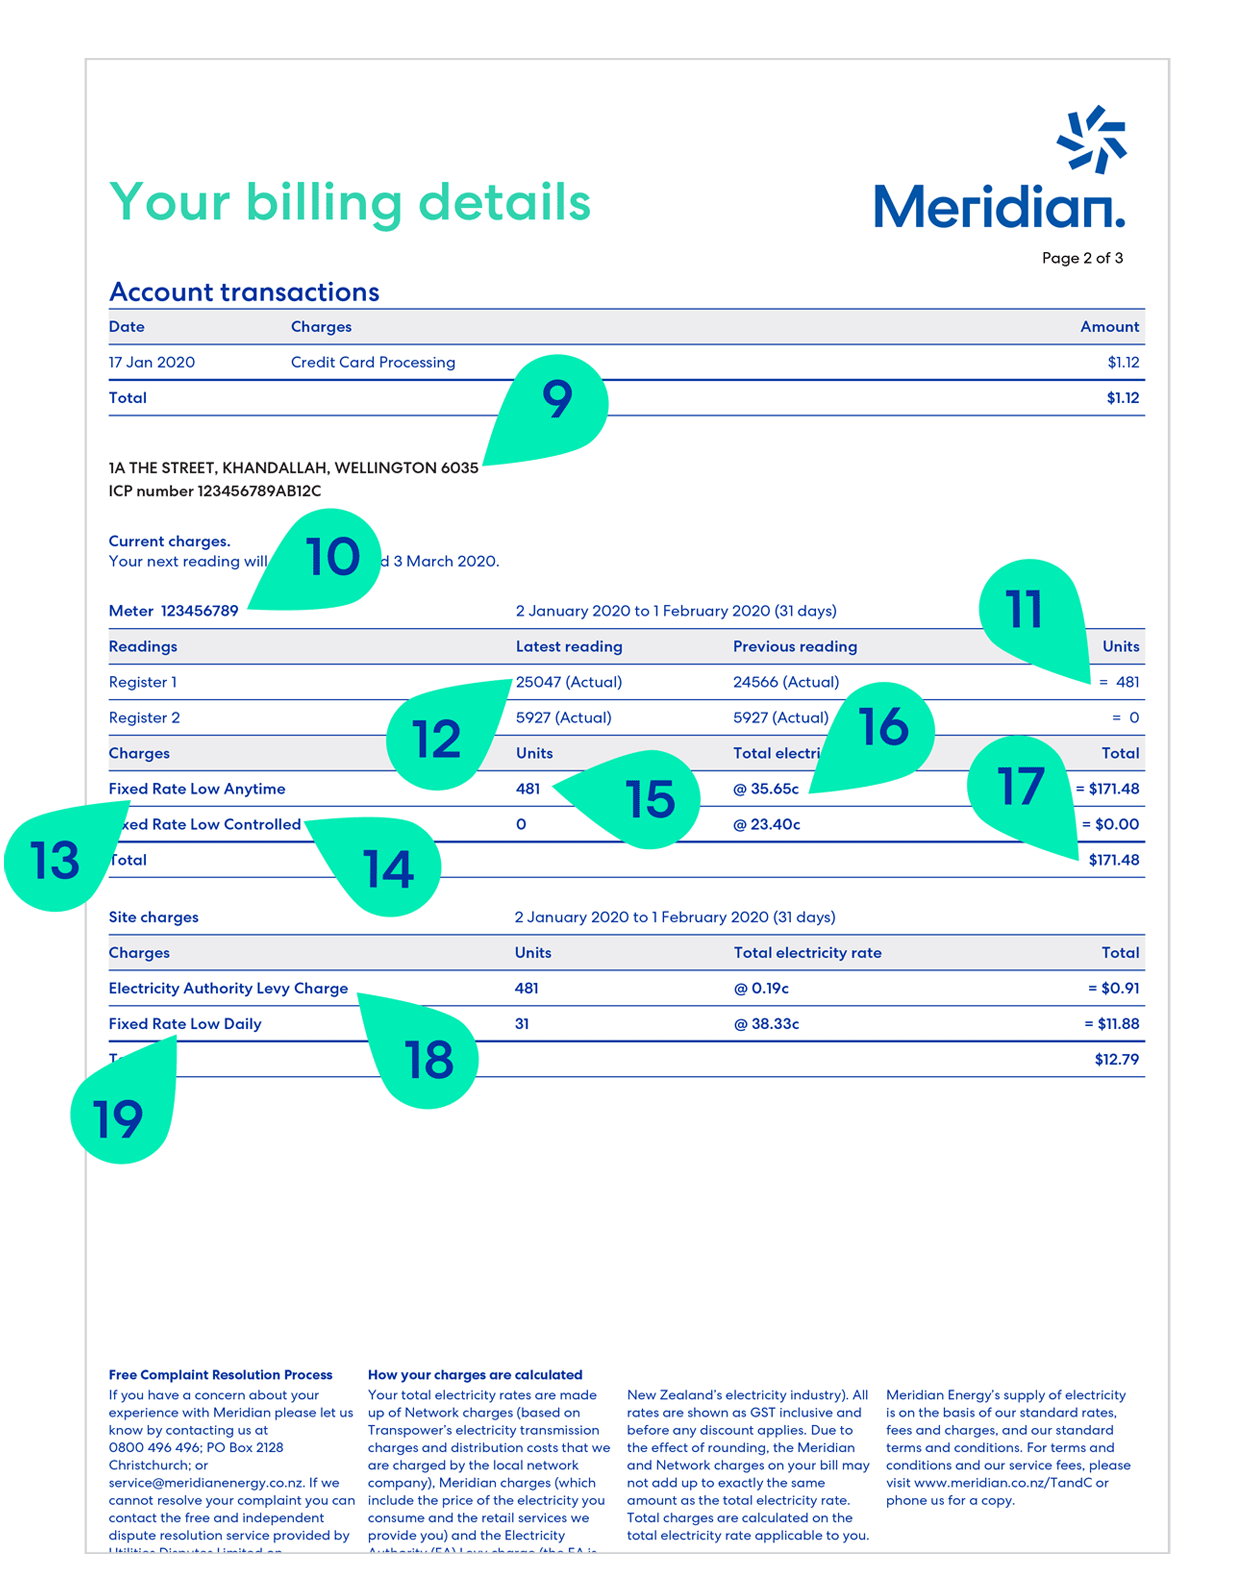 Meridian bill image 2